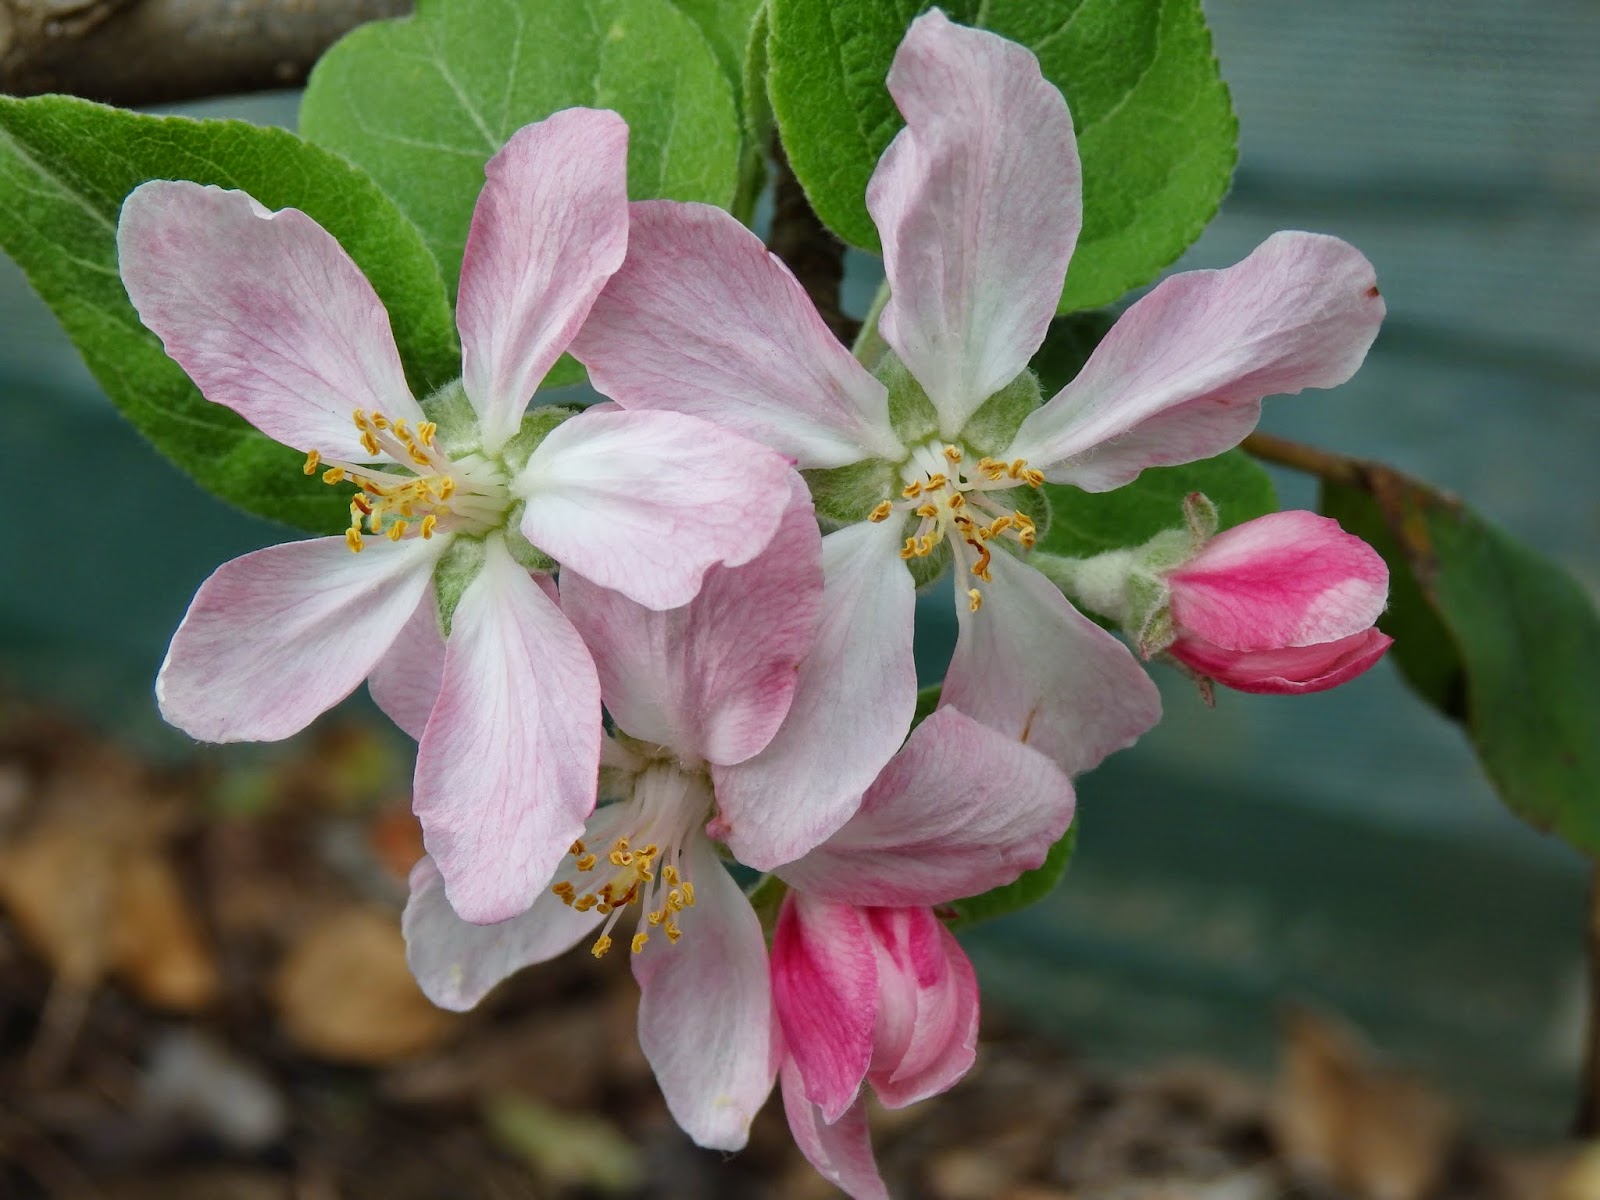 Daleys Fruit Tree Blog: Pollination of Fruit Trees